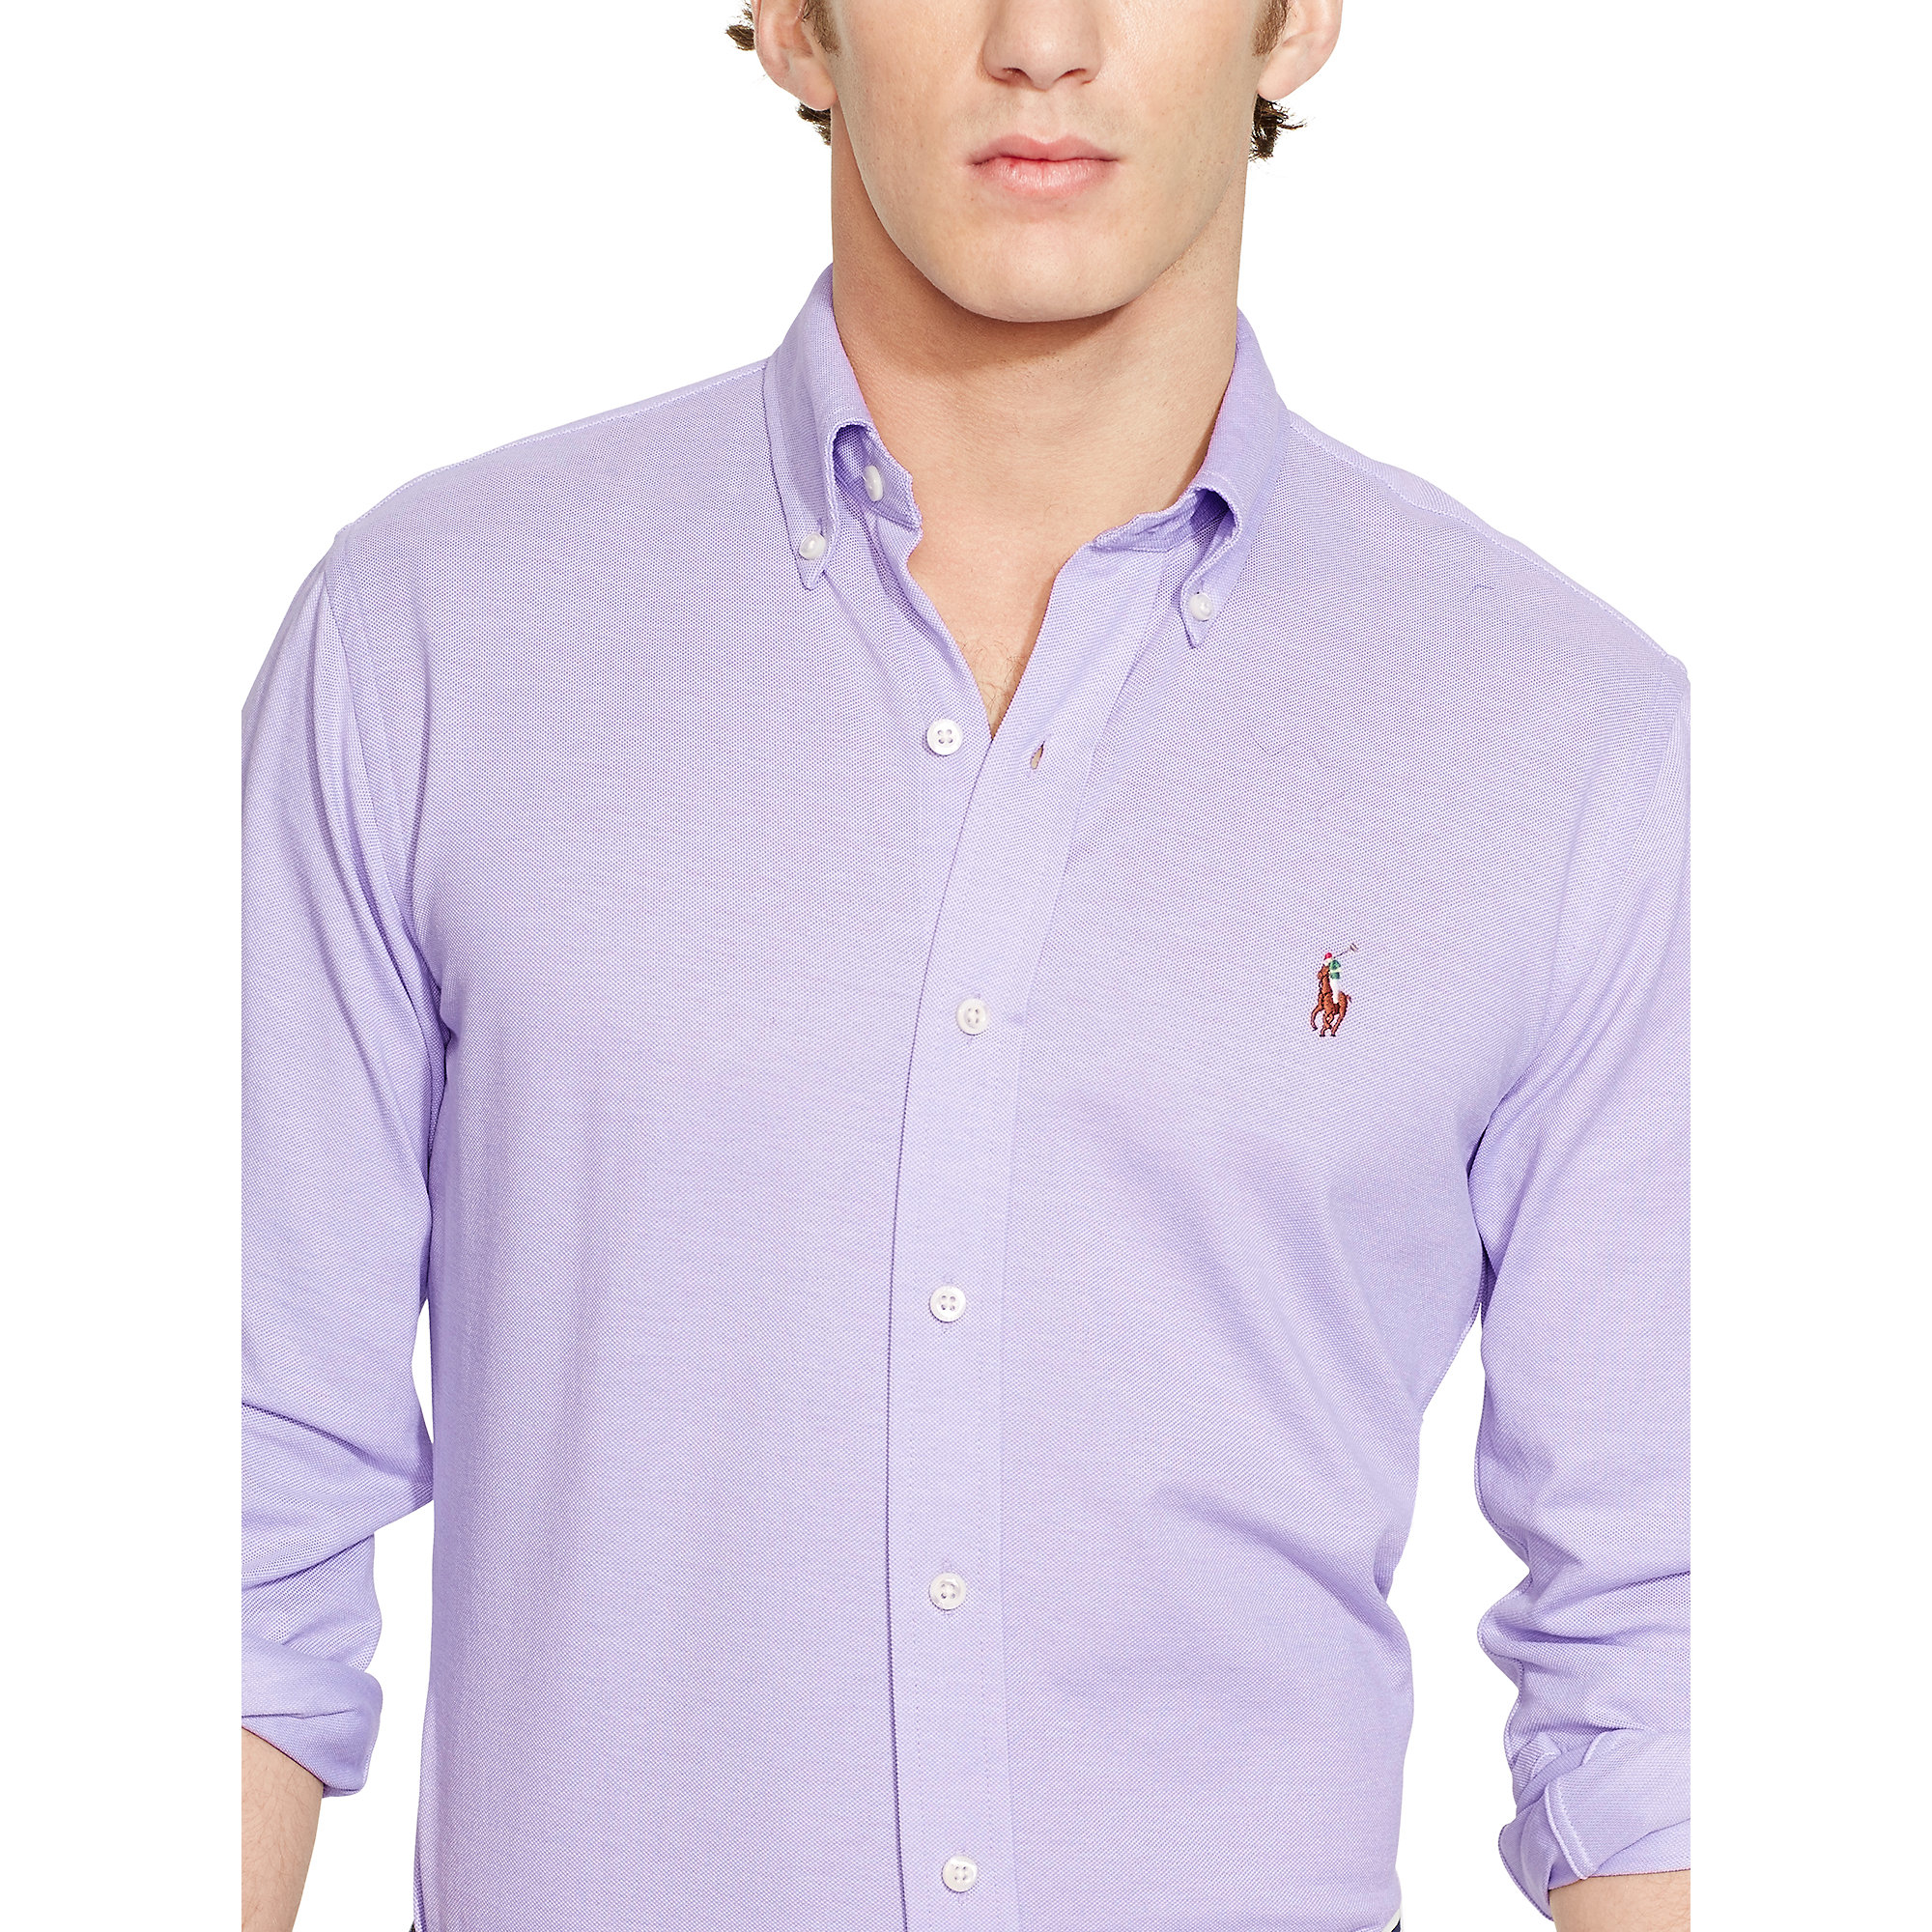 Lyst - Polo Ralph Lauren Knit Oxford Shirt in Purple for Men